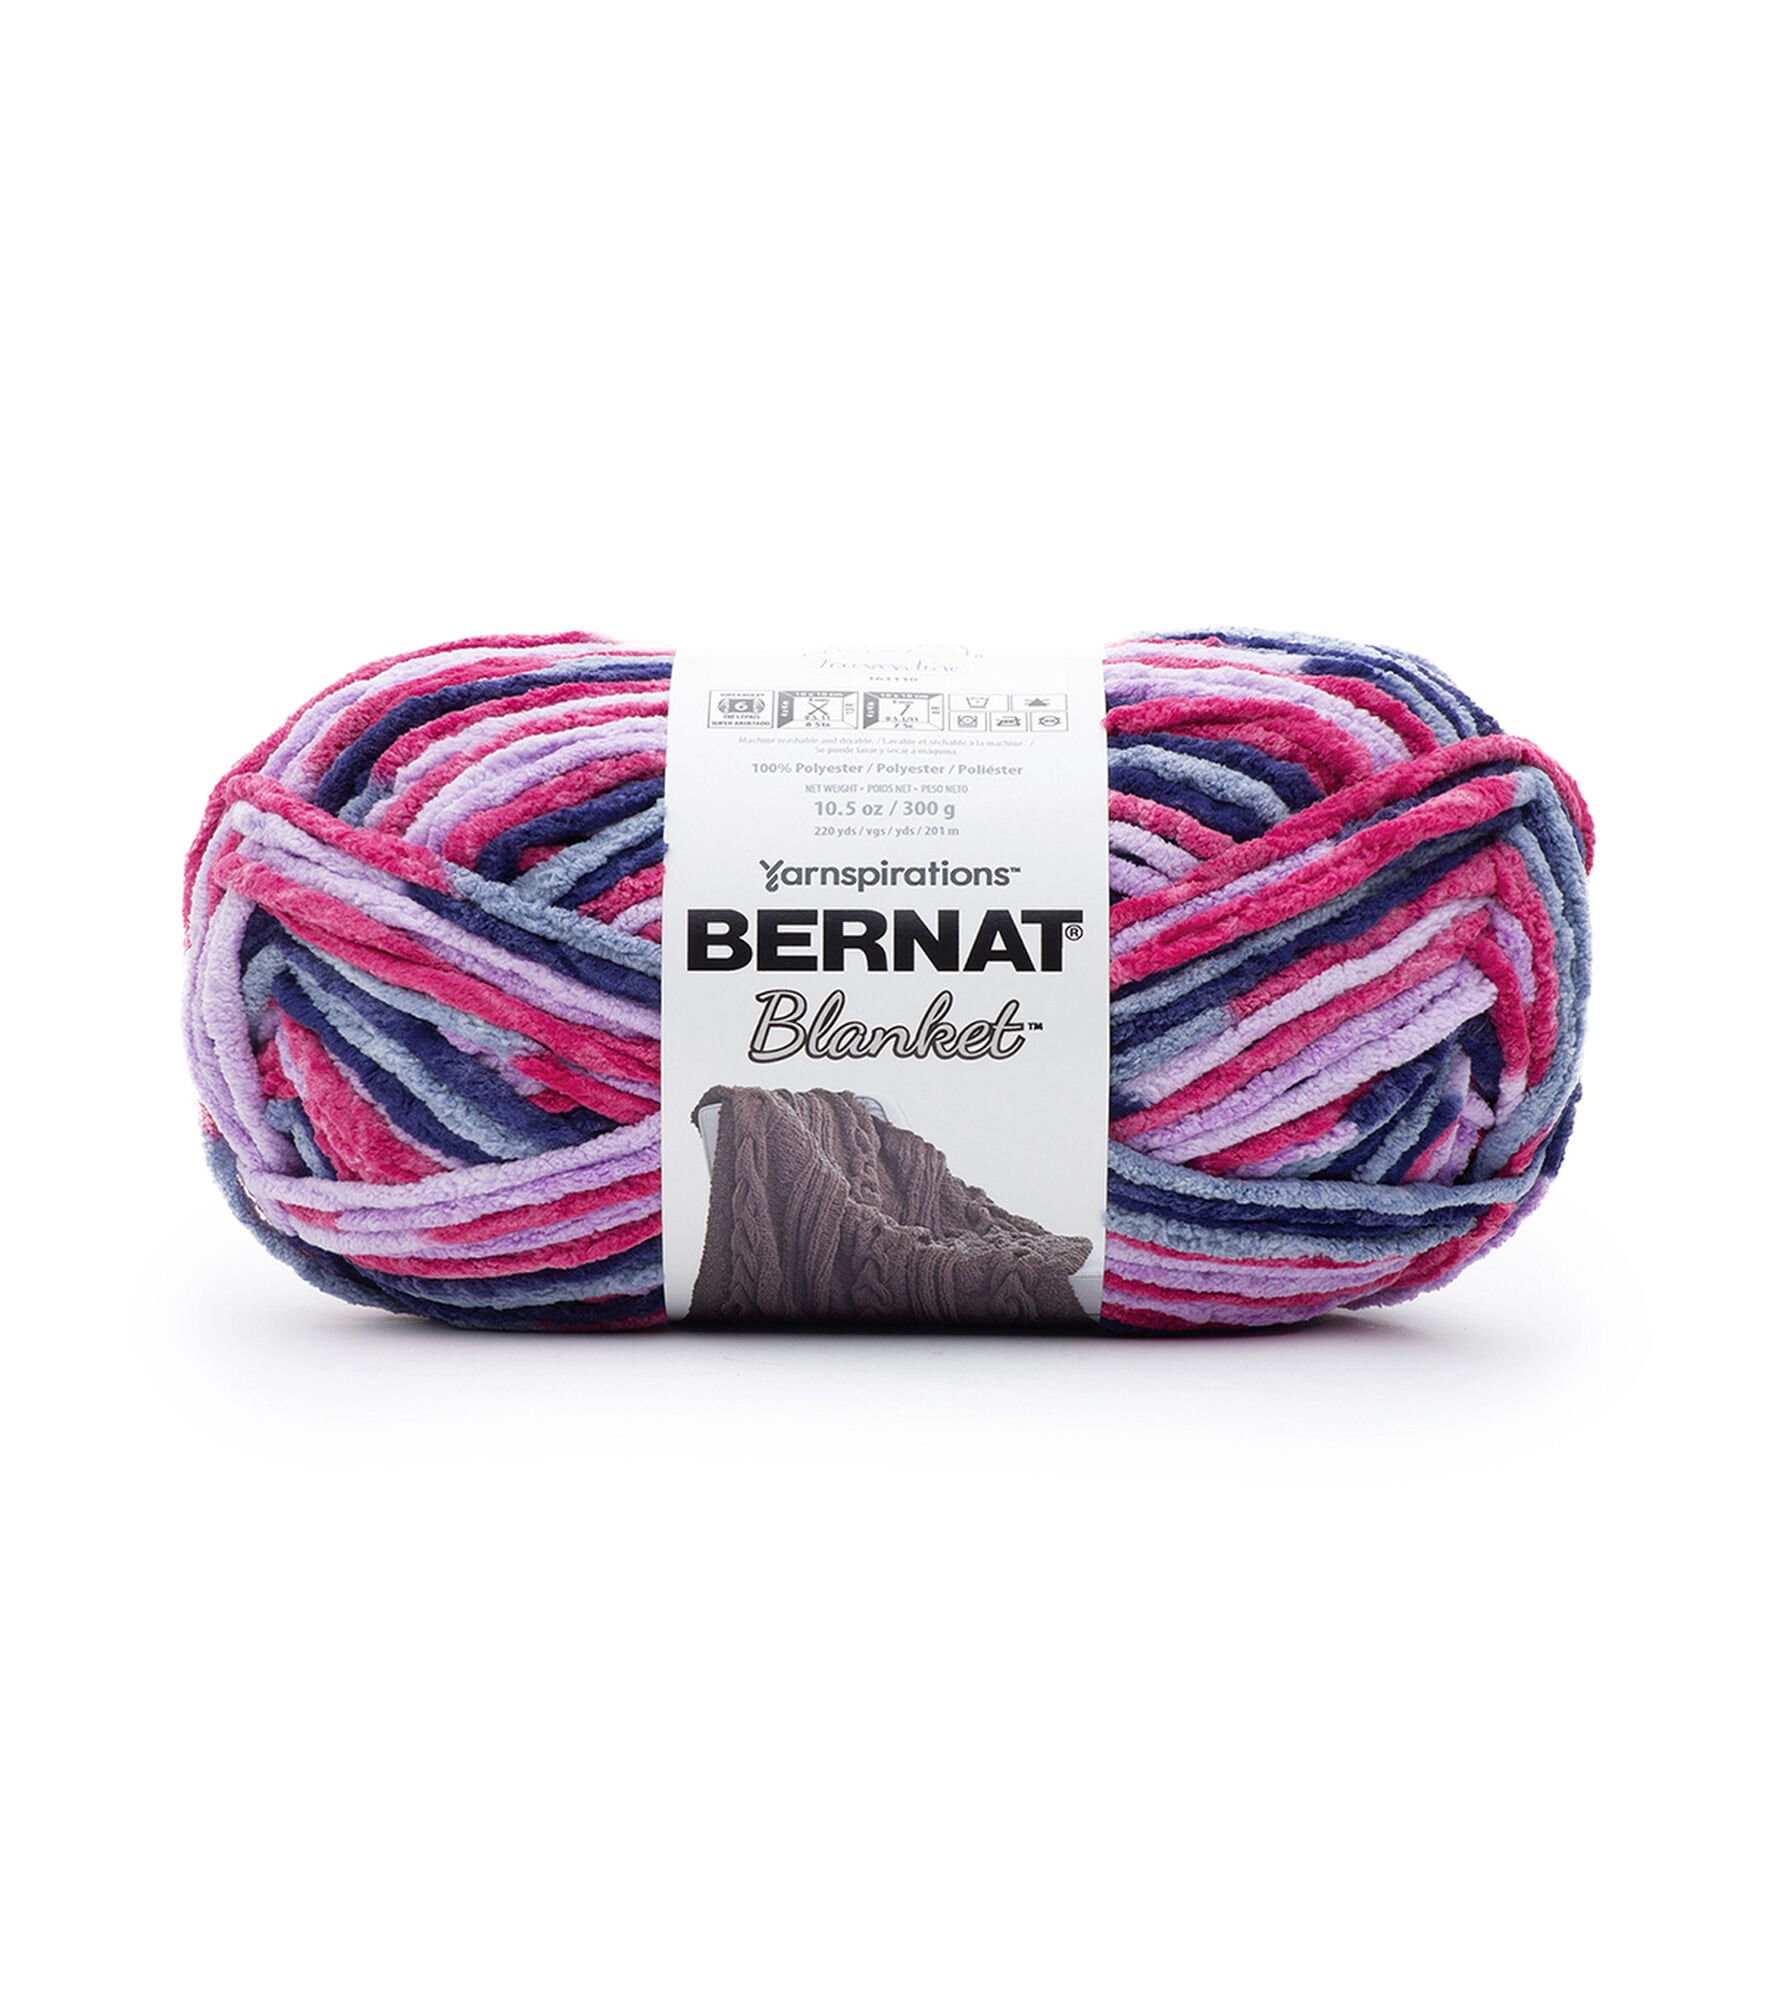 Bernat Blanket Yarn, Super Bulky Yarn